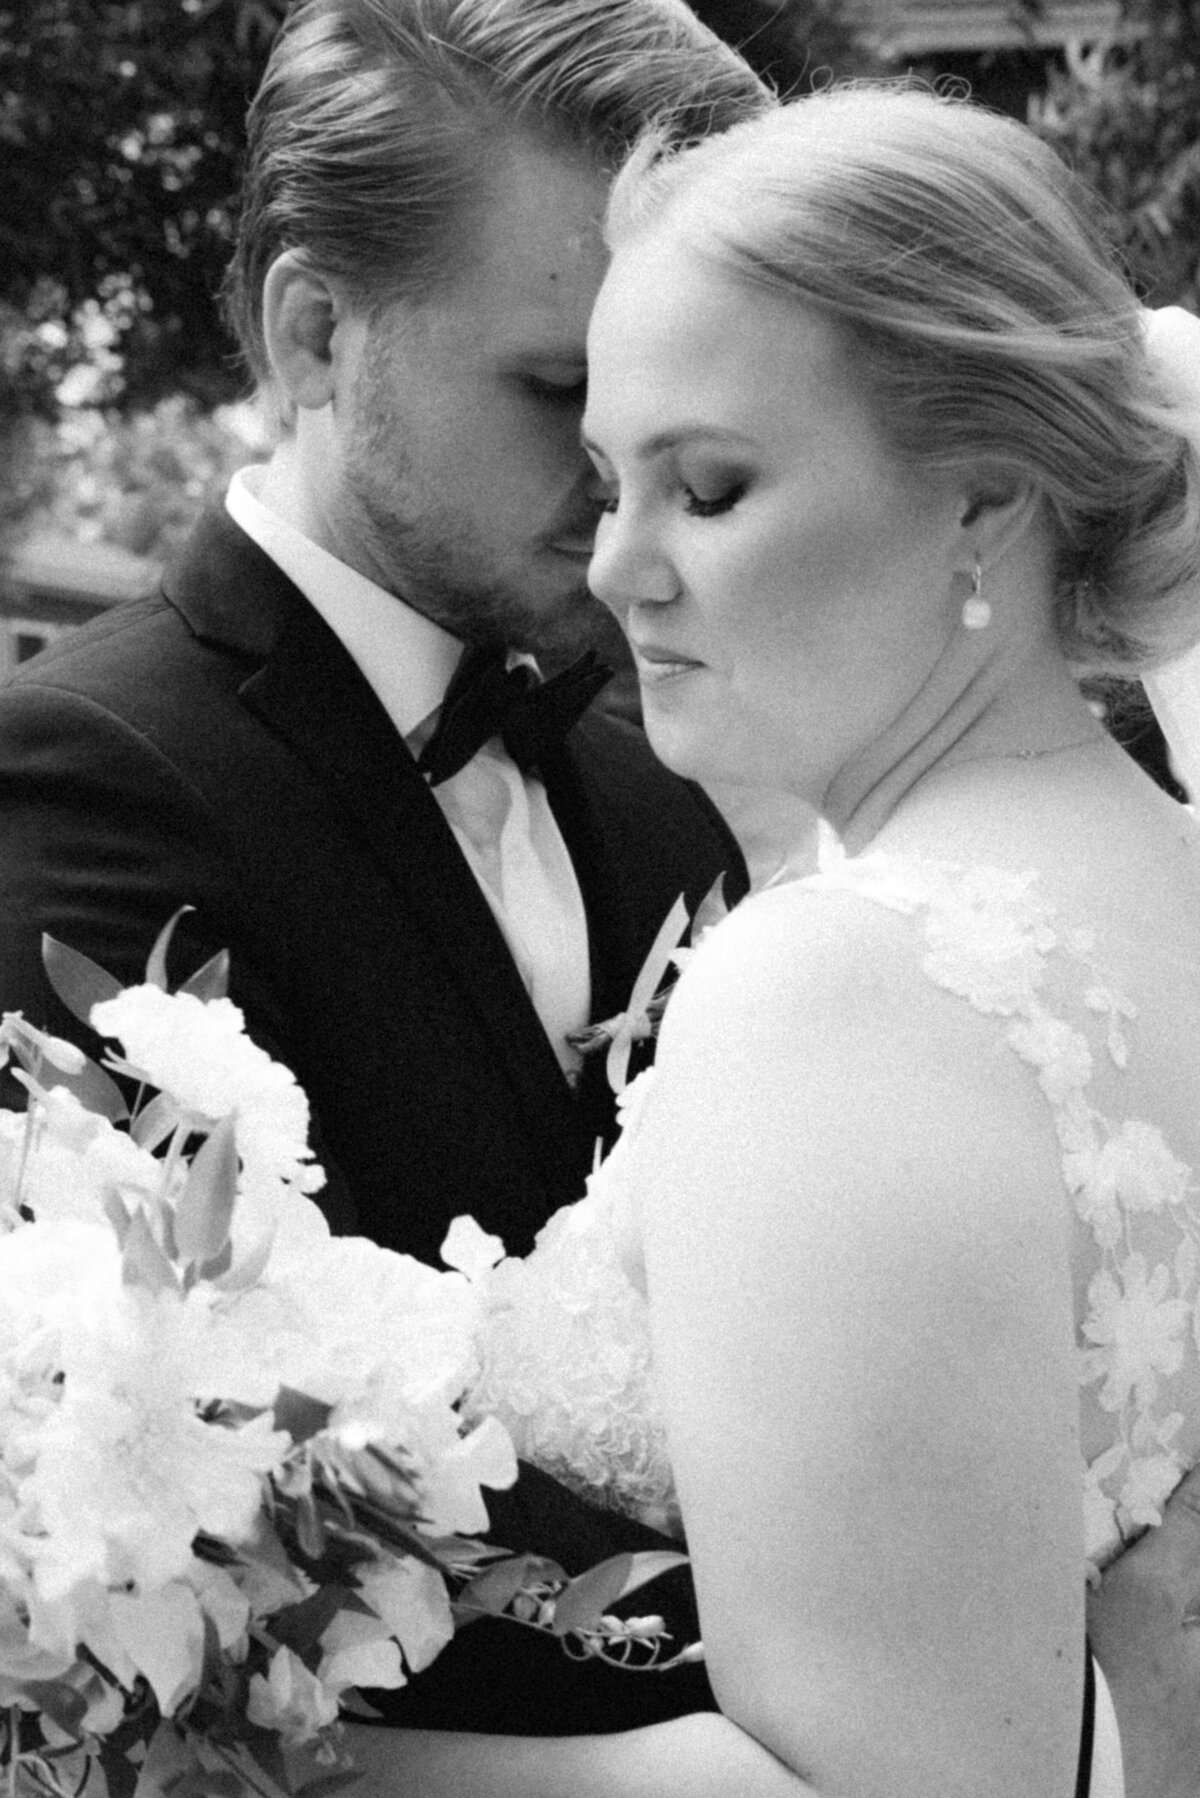 Wedding couple photographed by wedding photographer Hannika Gabrielsson.